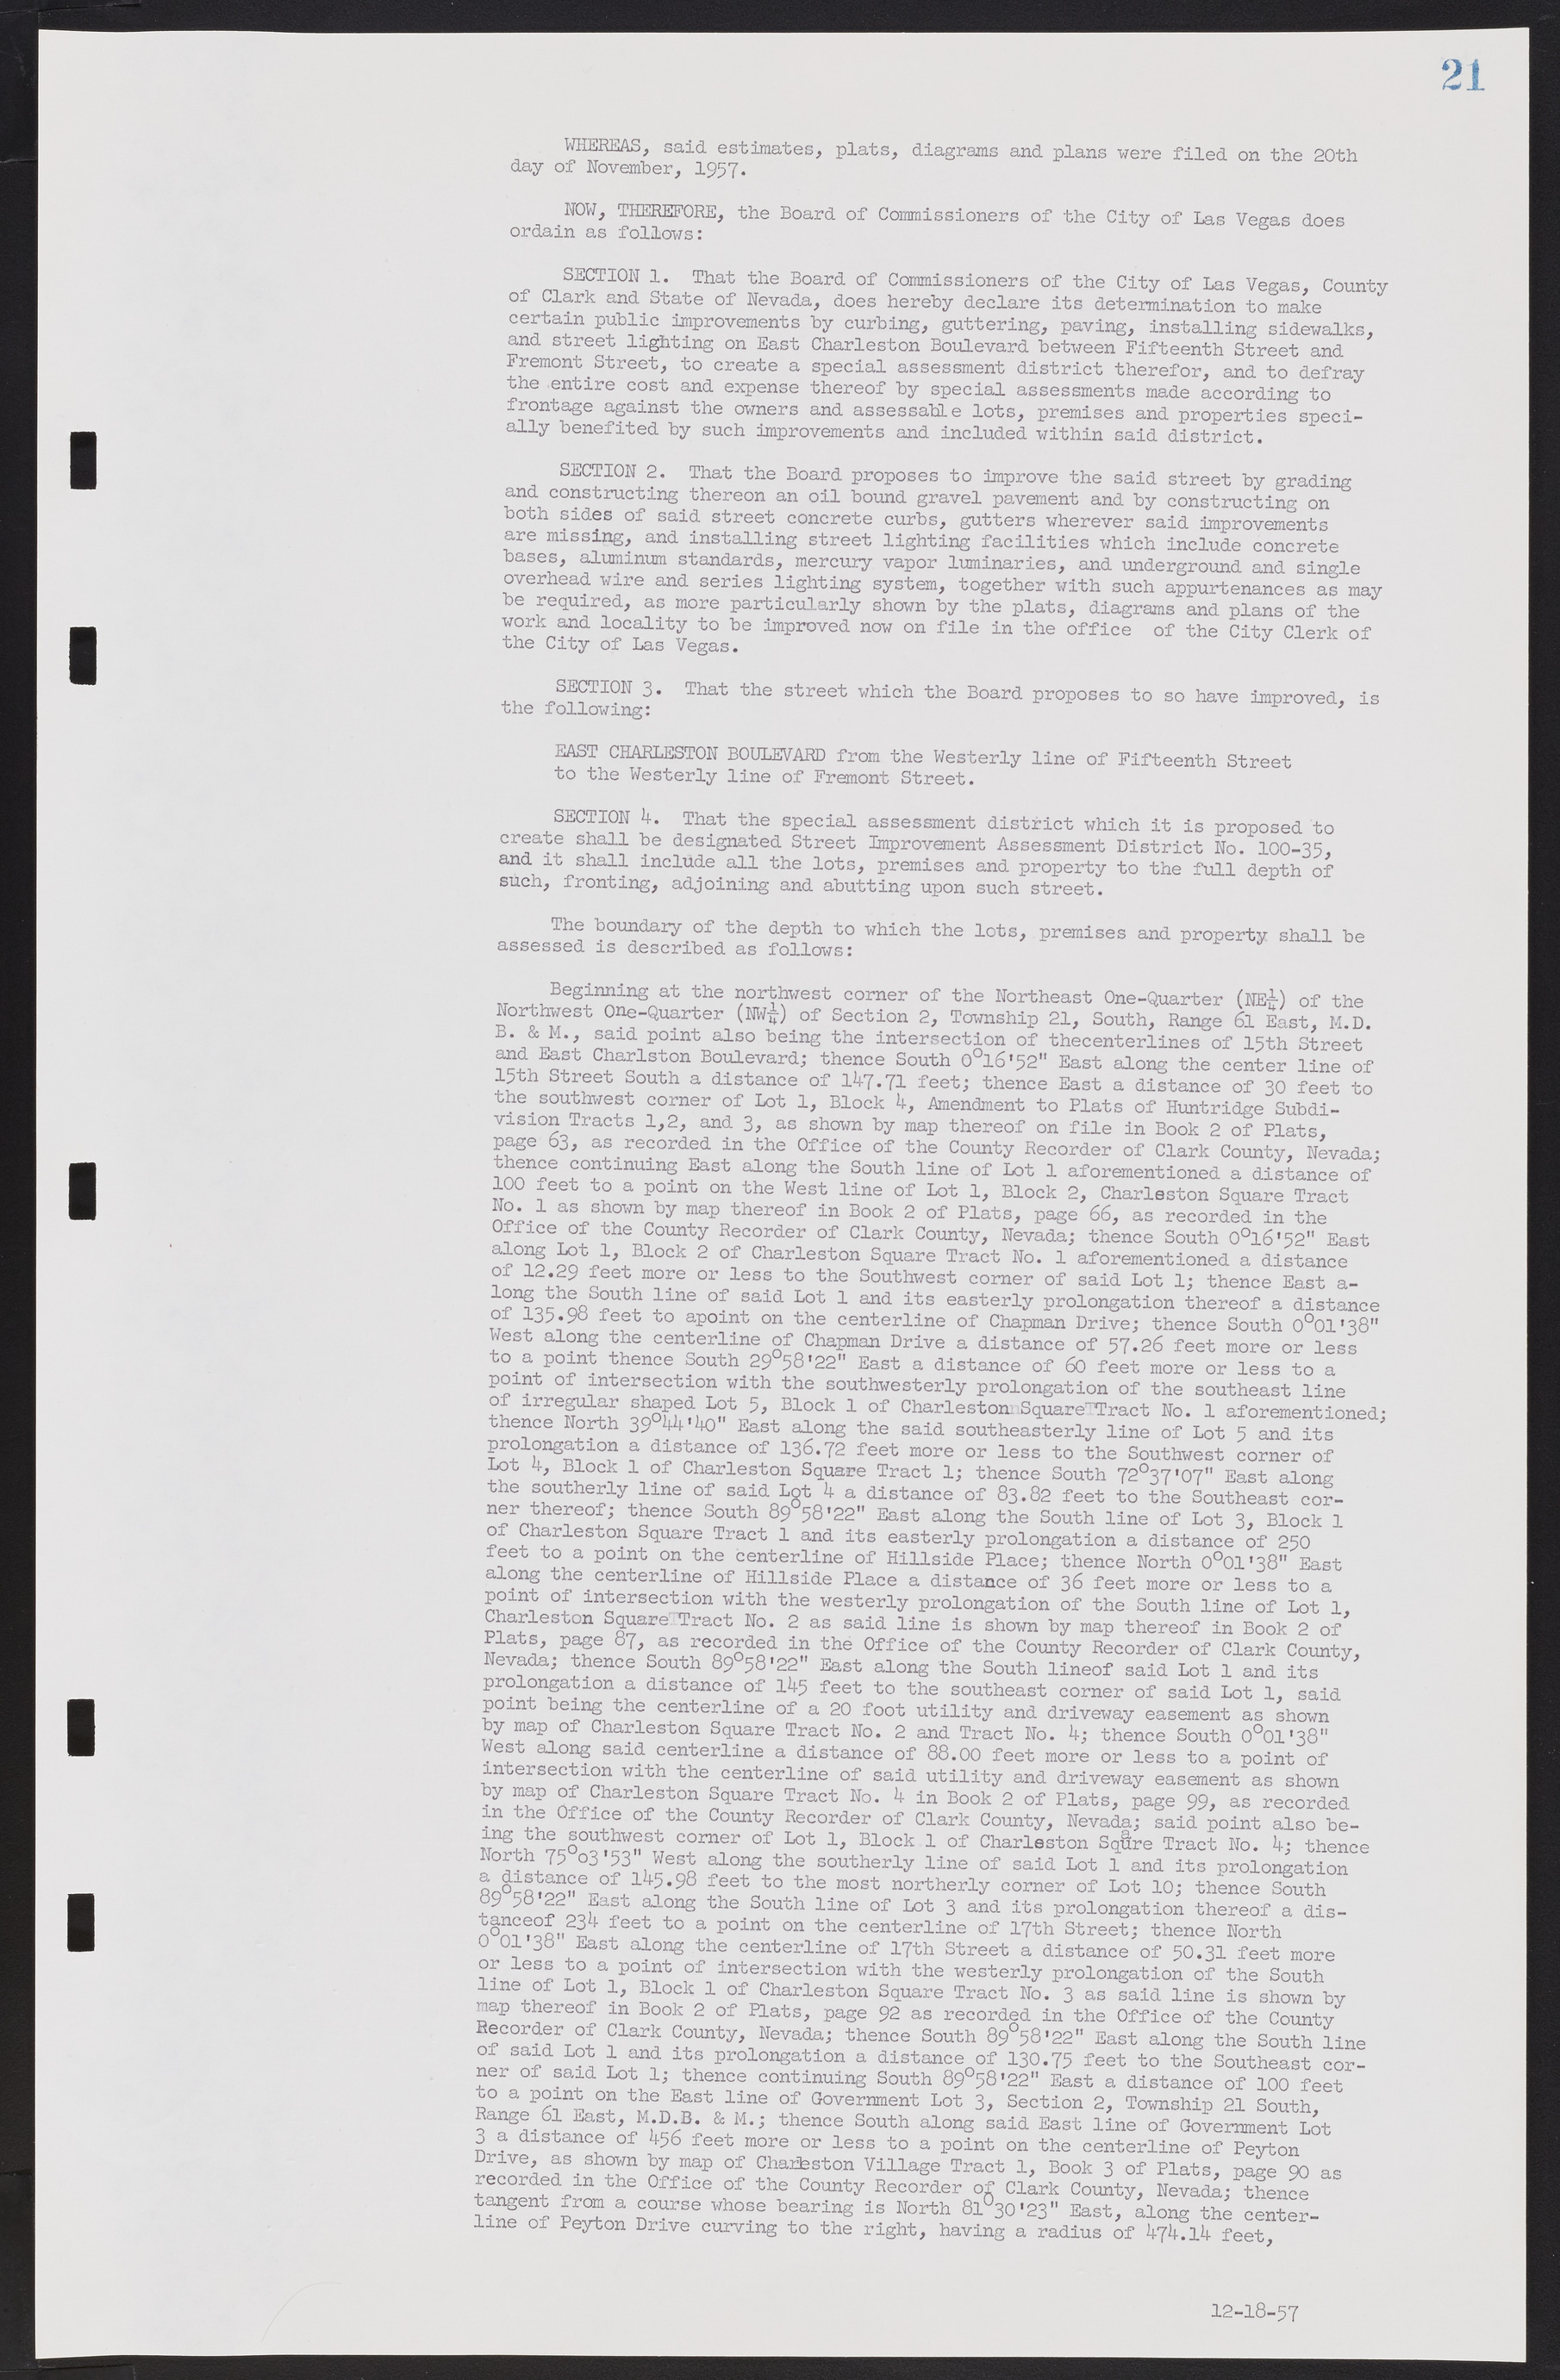 Las Vegas City Commission Minutes, November 20, 1957 to December 2, 1959, lvc000011-25